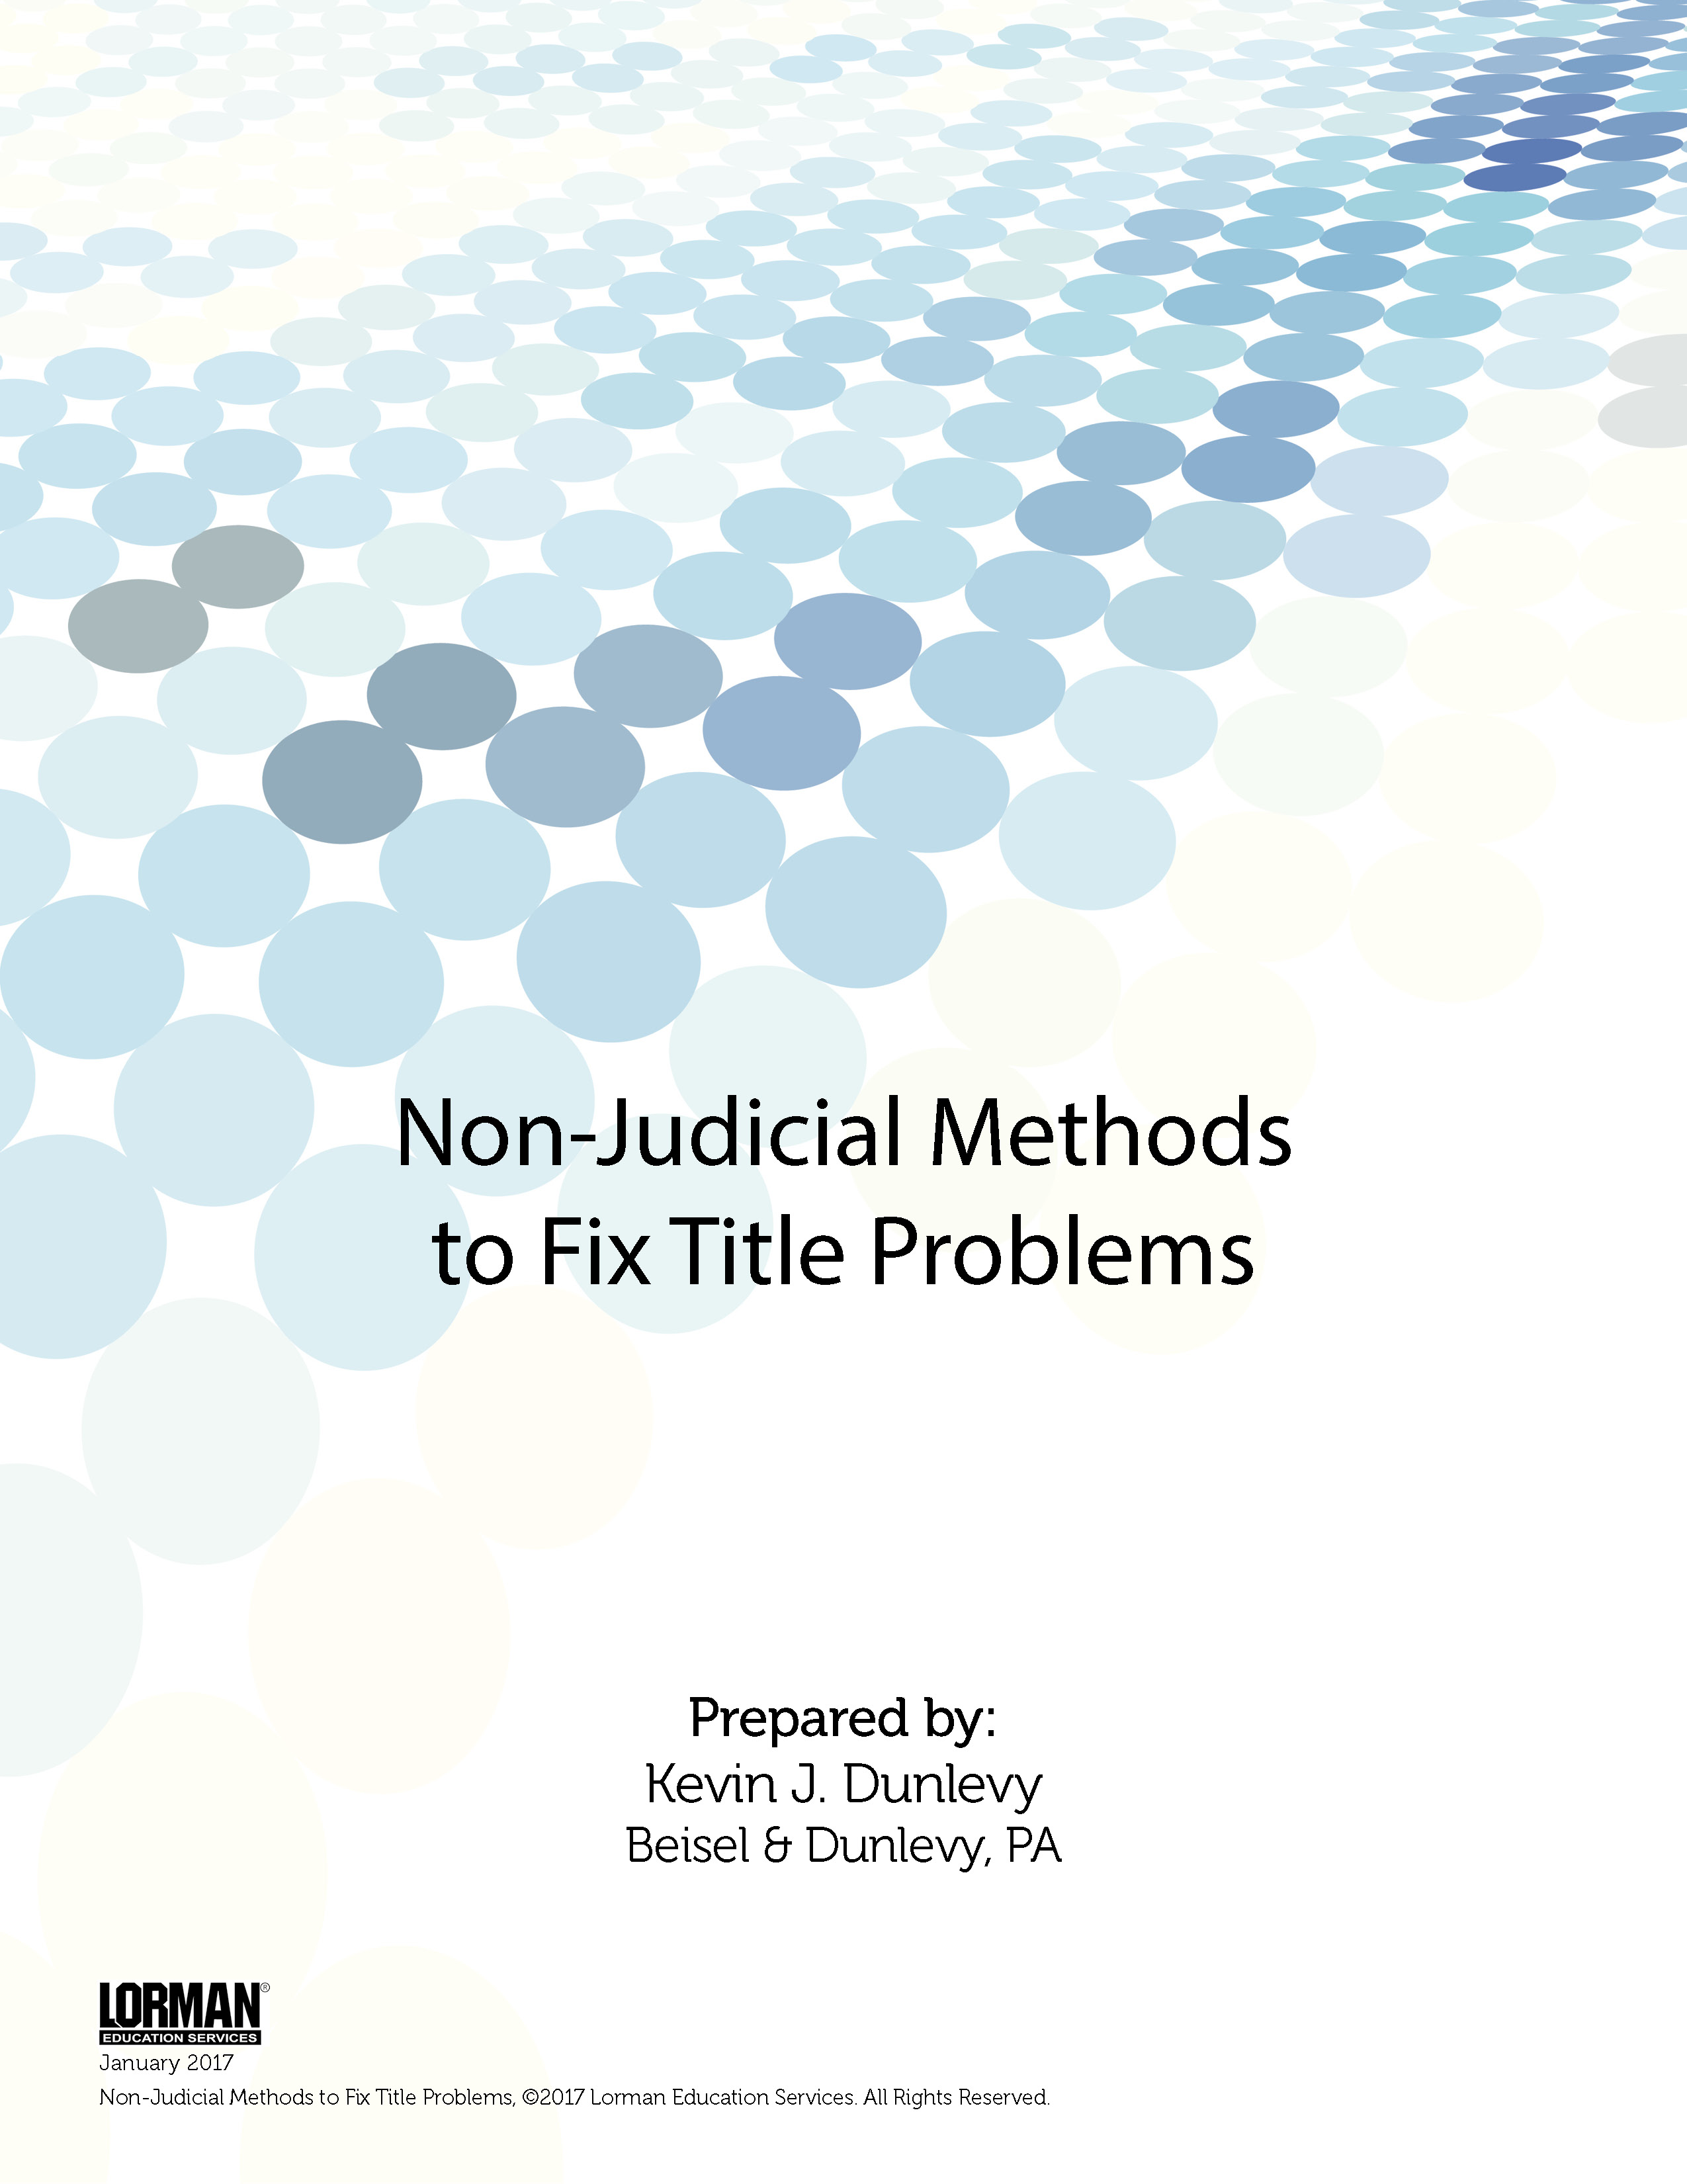 Non-Judicial Methods to Fix Title Problems